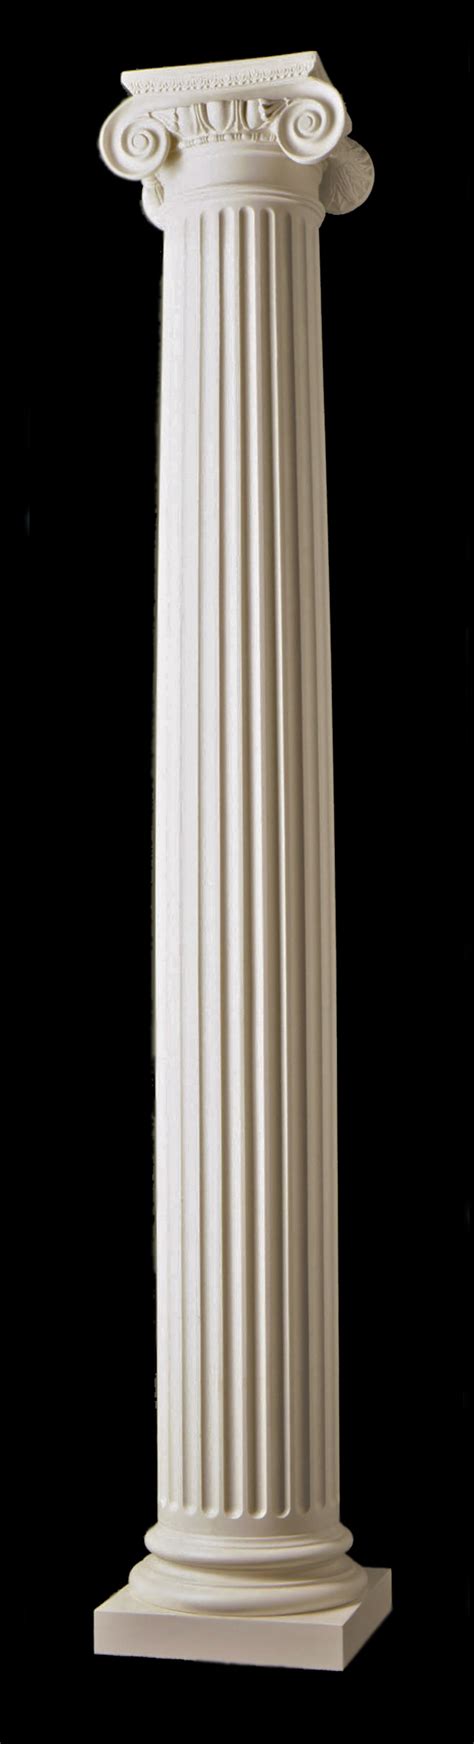 Beautiful House Column Designs By Chadsworth Columns Roman Ionic